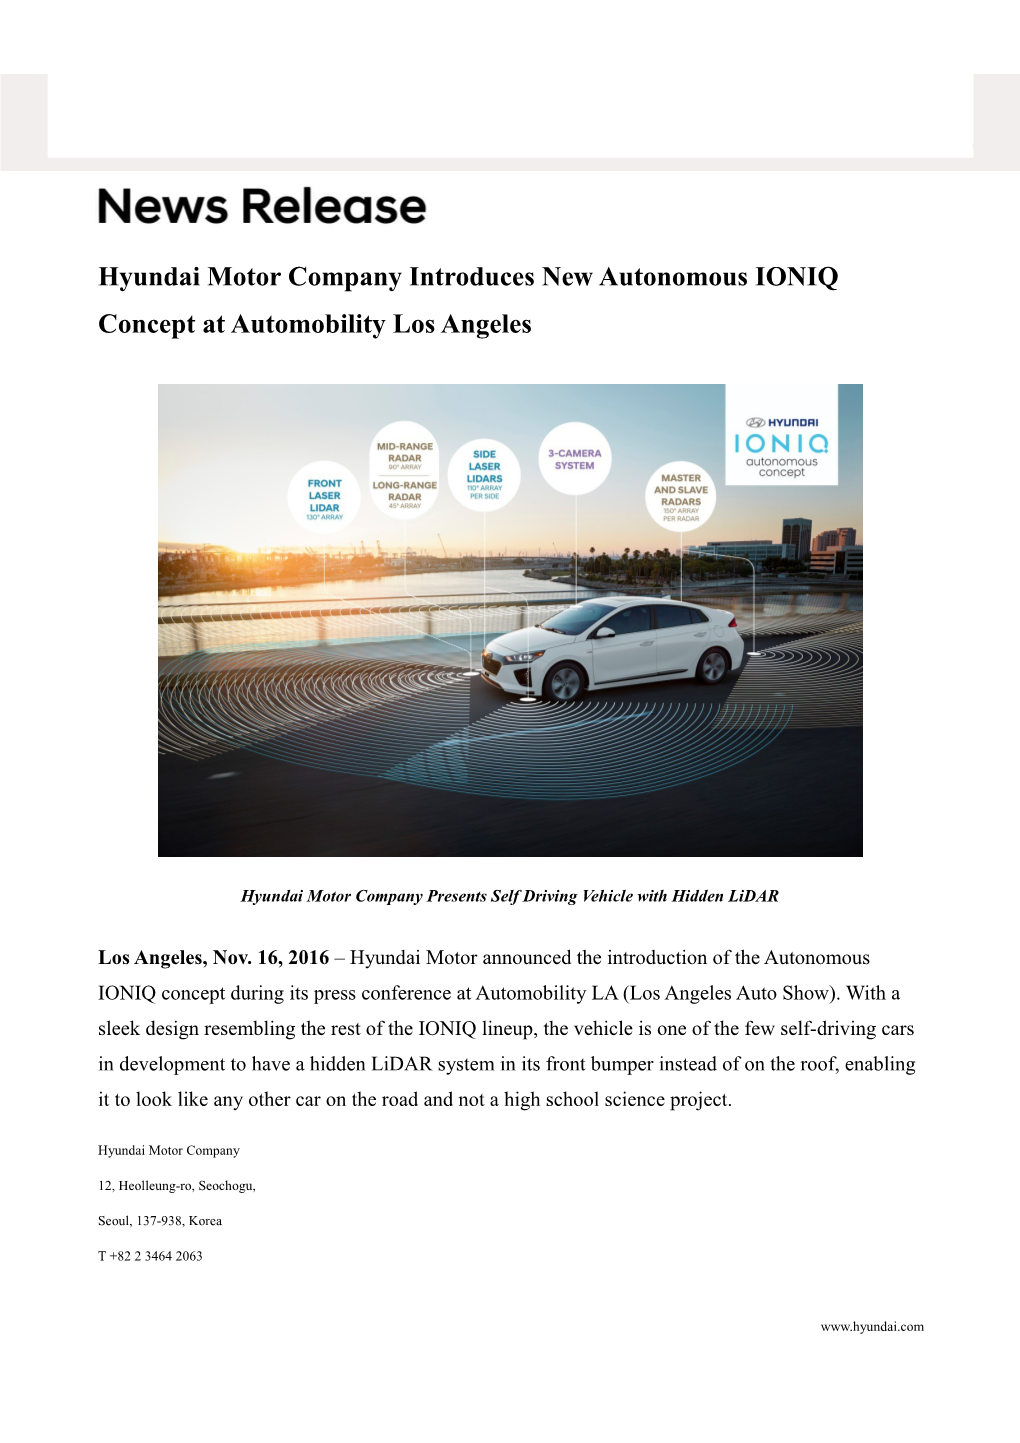 Hyundai Motor Company Introducesnew Autonomous IONIQ Concept at Automobility Los Angeles